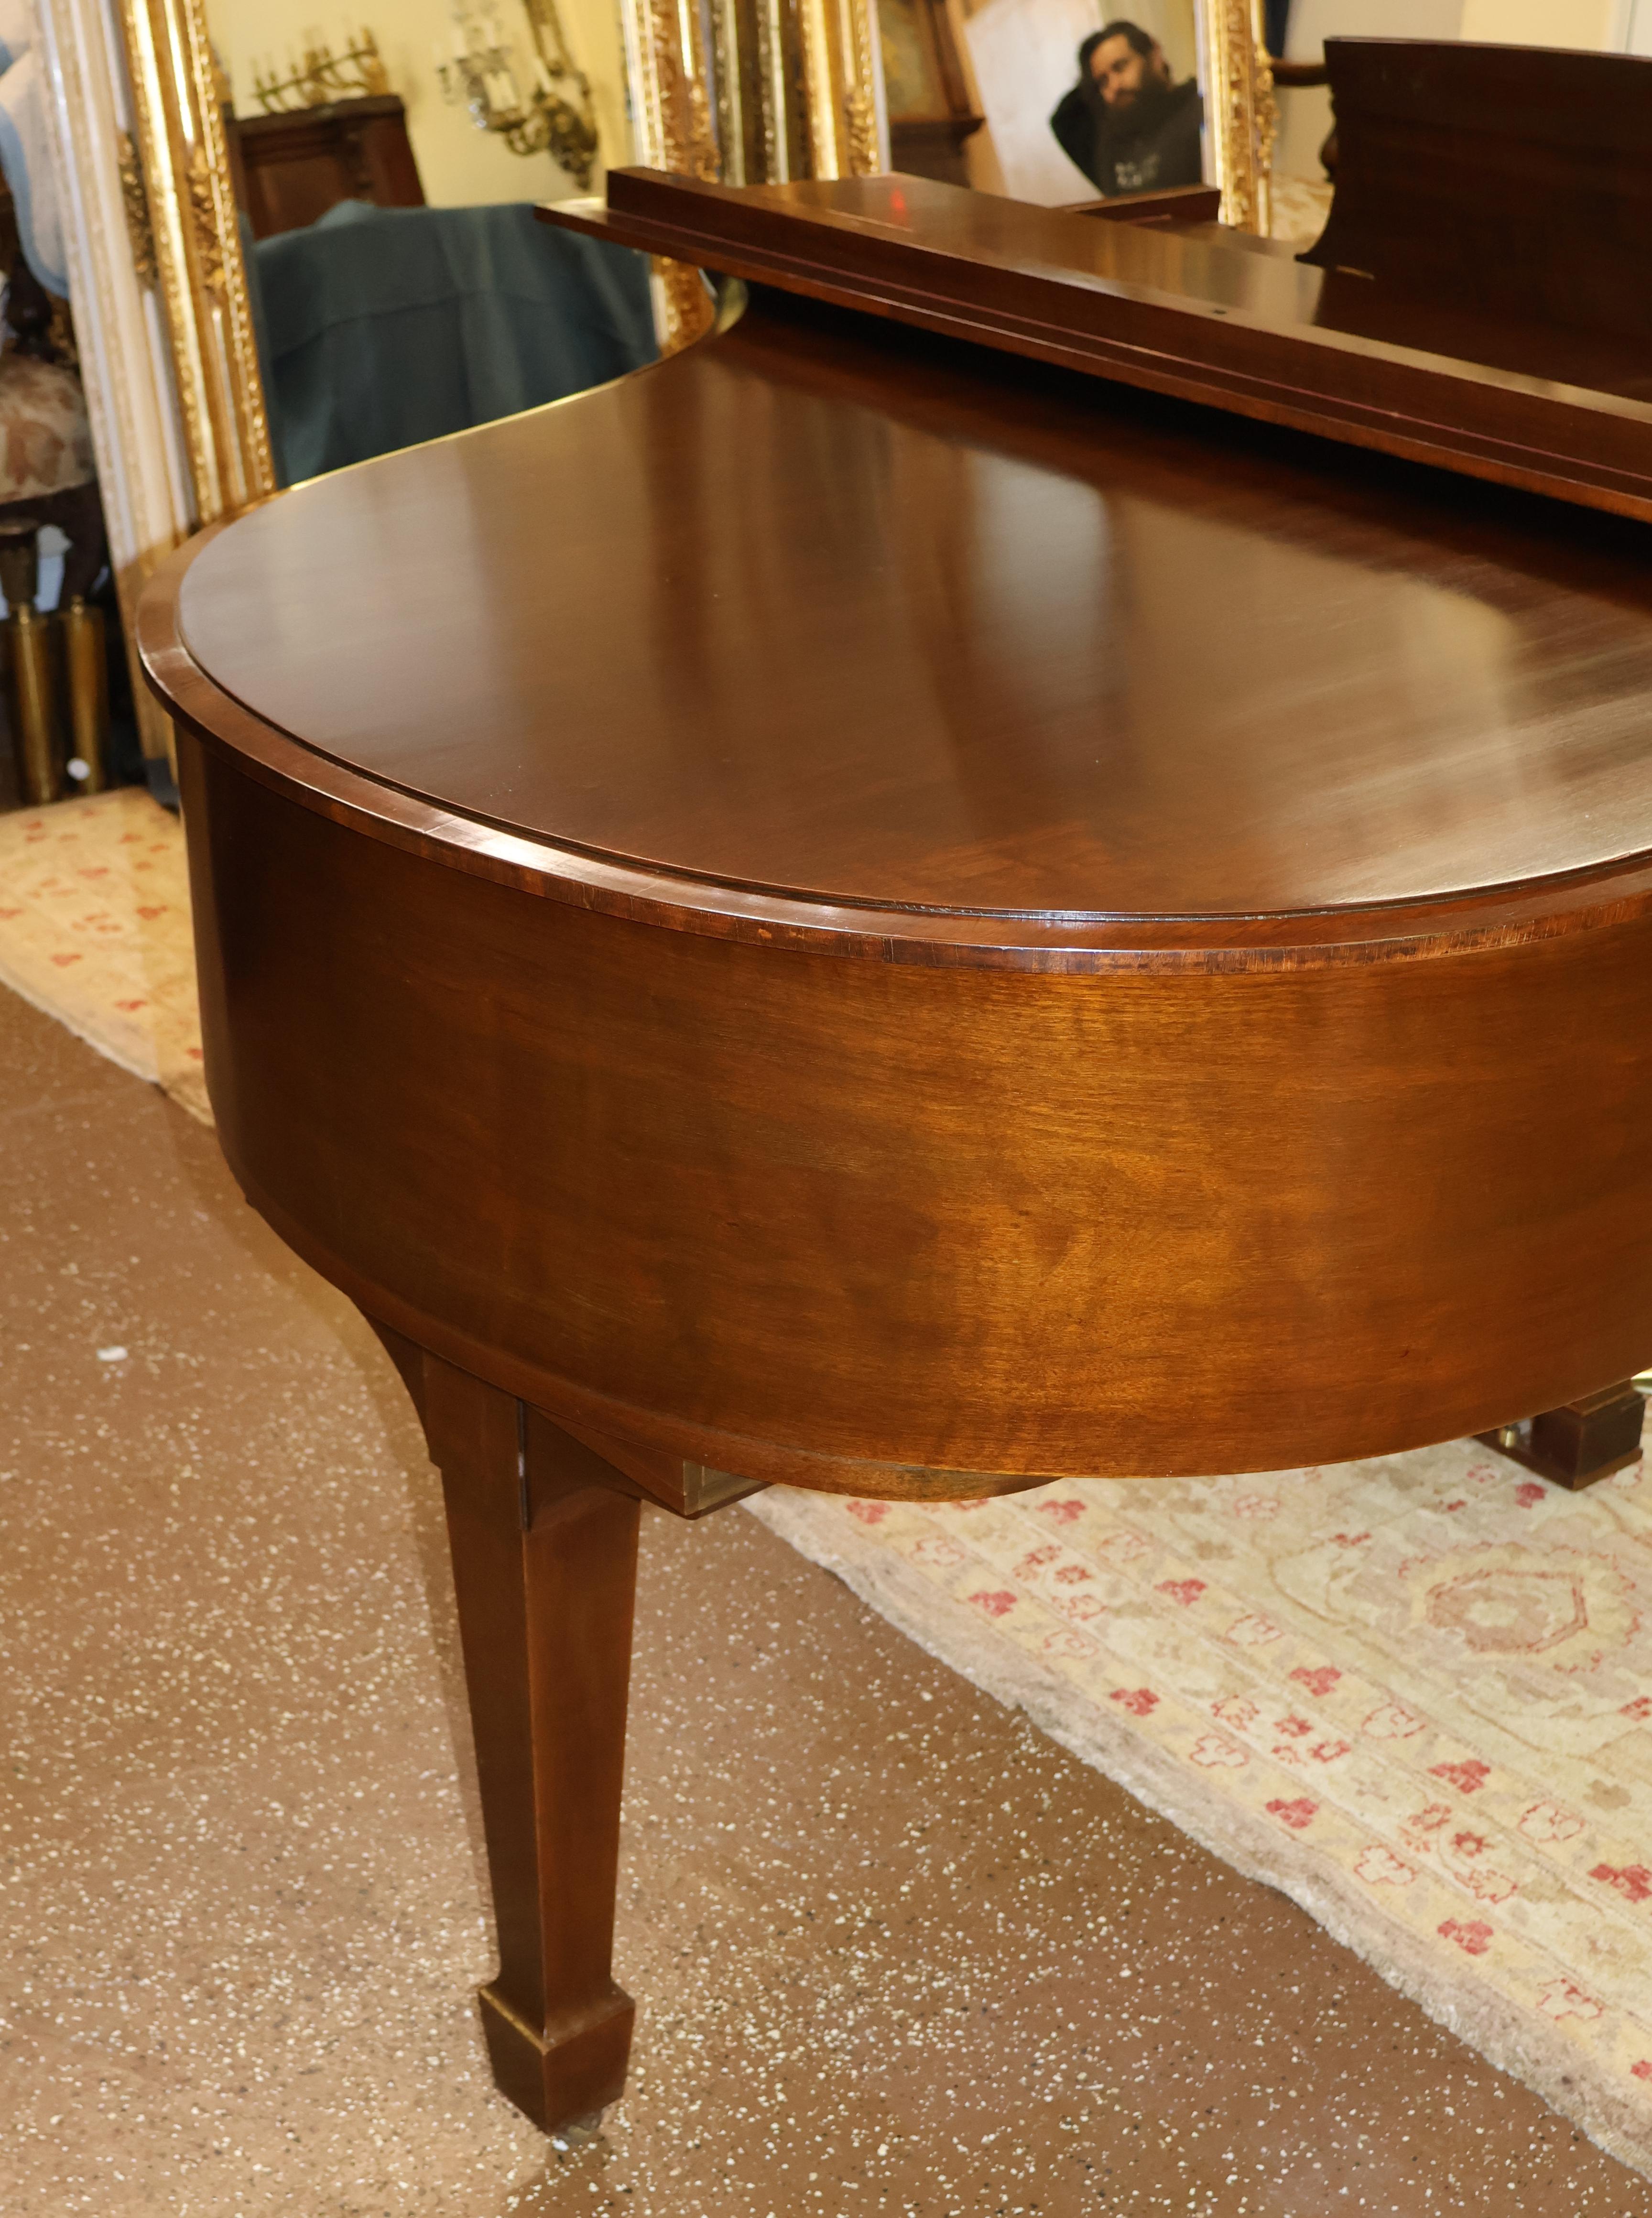 1951 Steinway Walnut Model M Baby Grand Piano 5'7